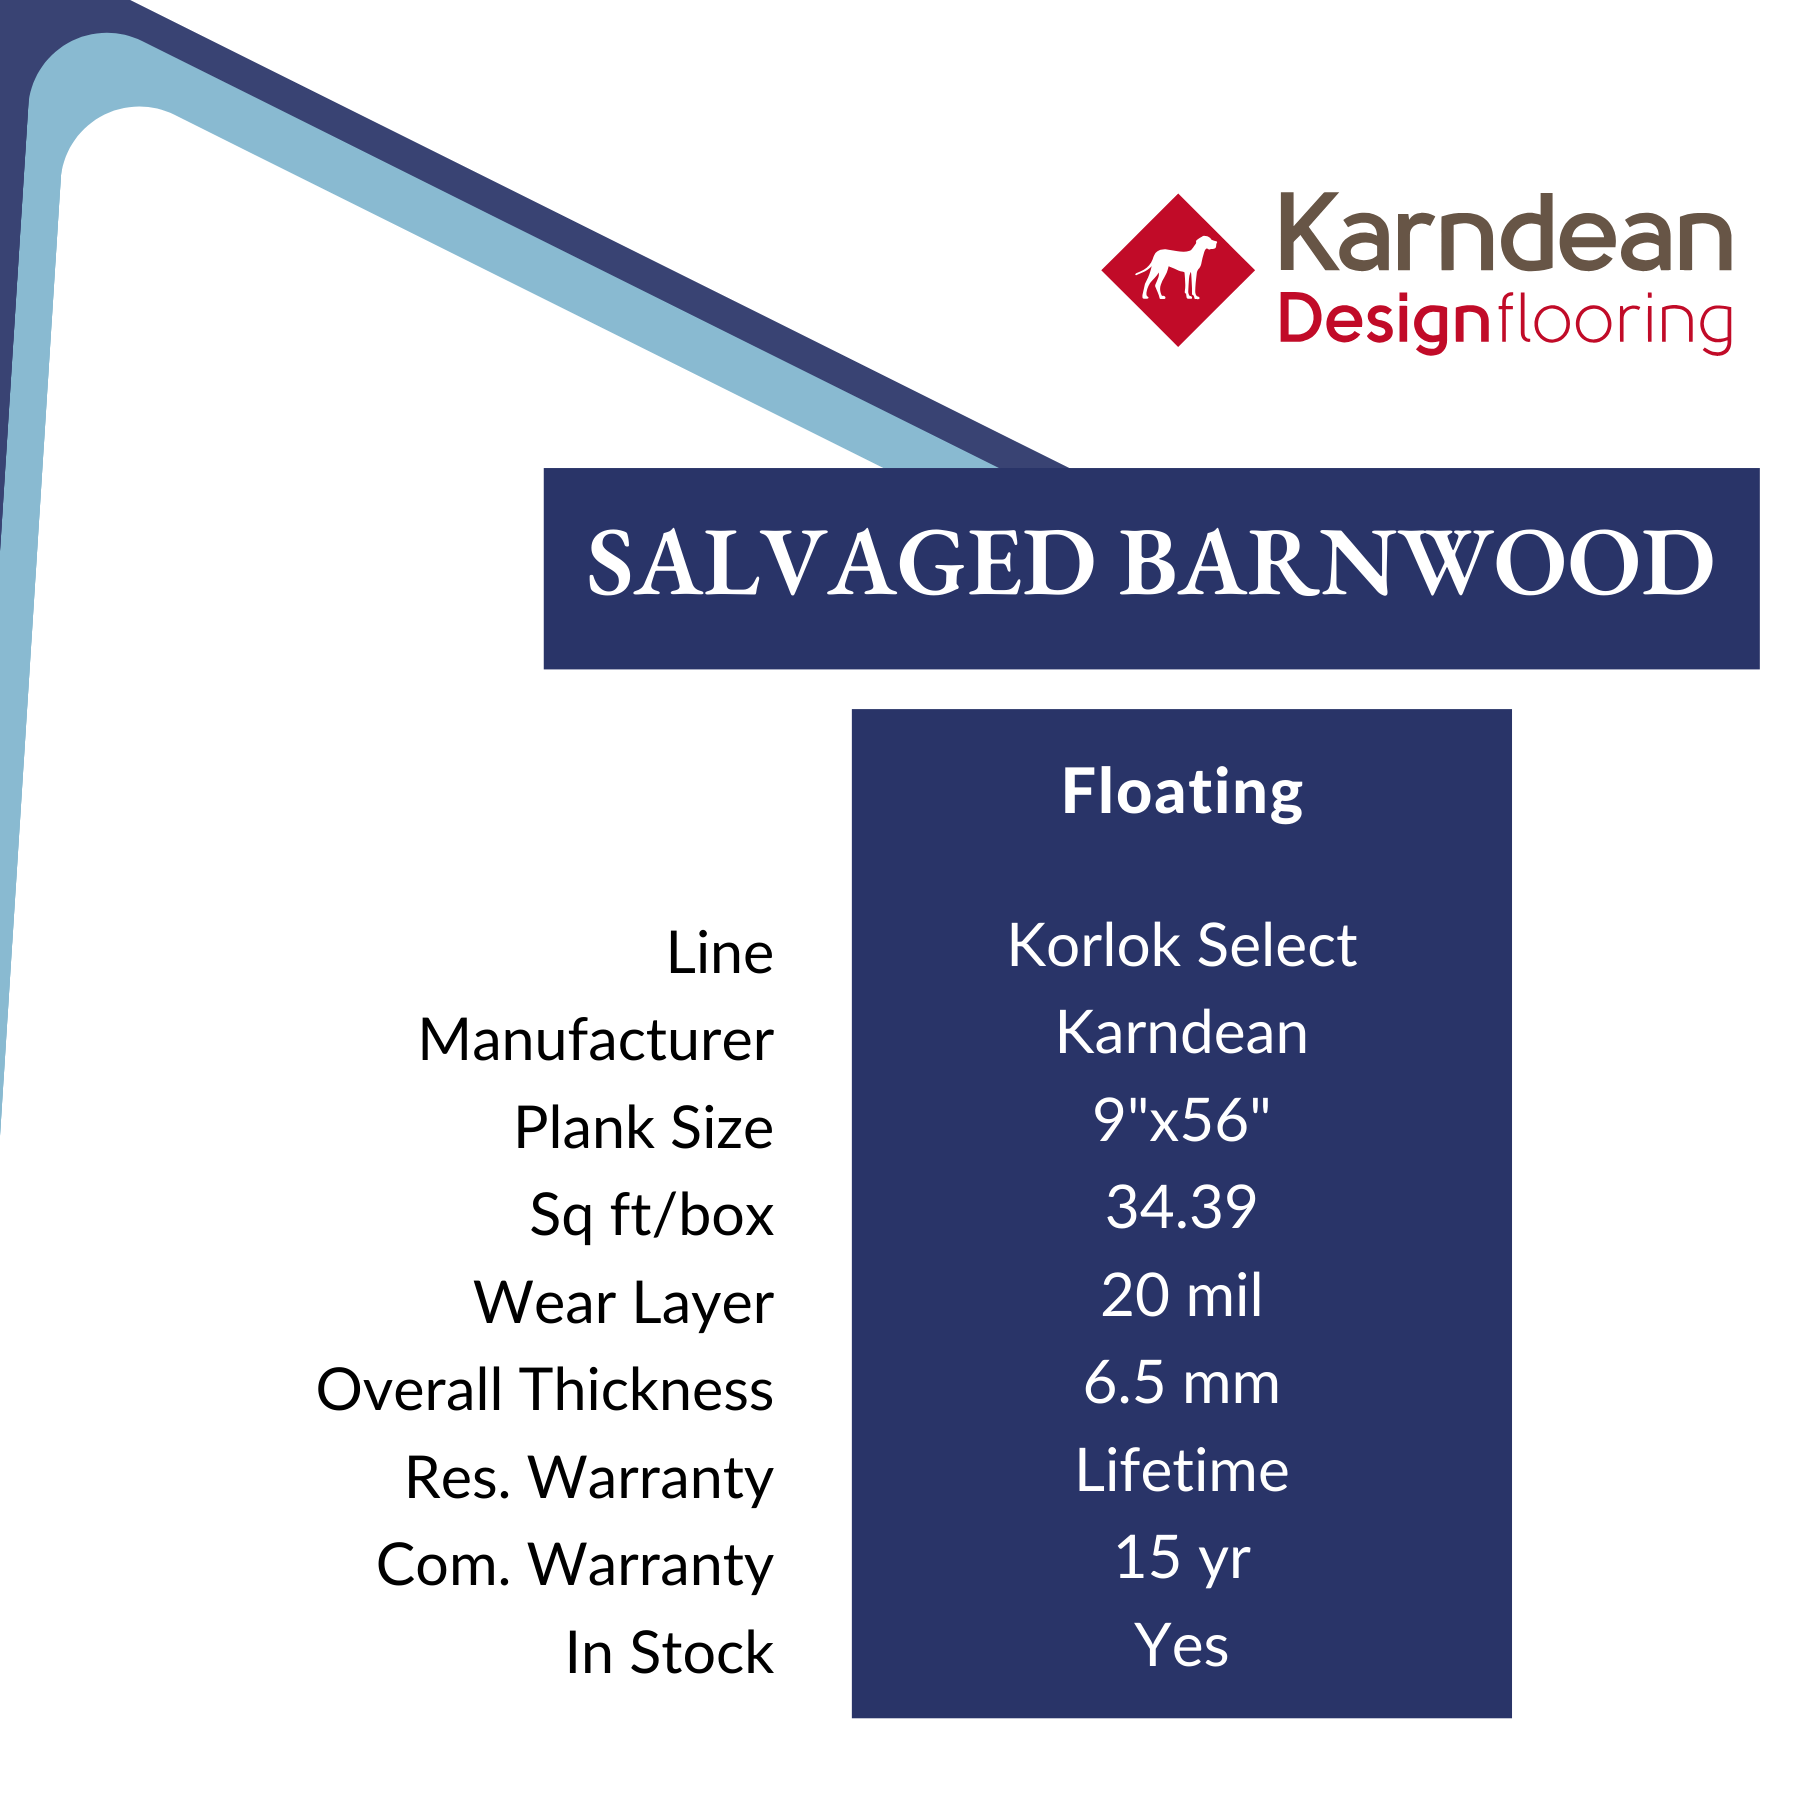 Salvaged Barnwood Luxury Vinyl Flooring from Karndean, sold at Calhoun’s, Springfield, IL Specs